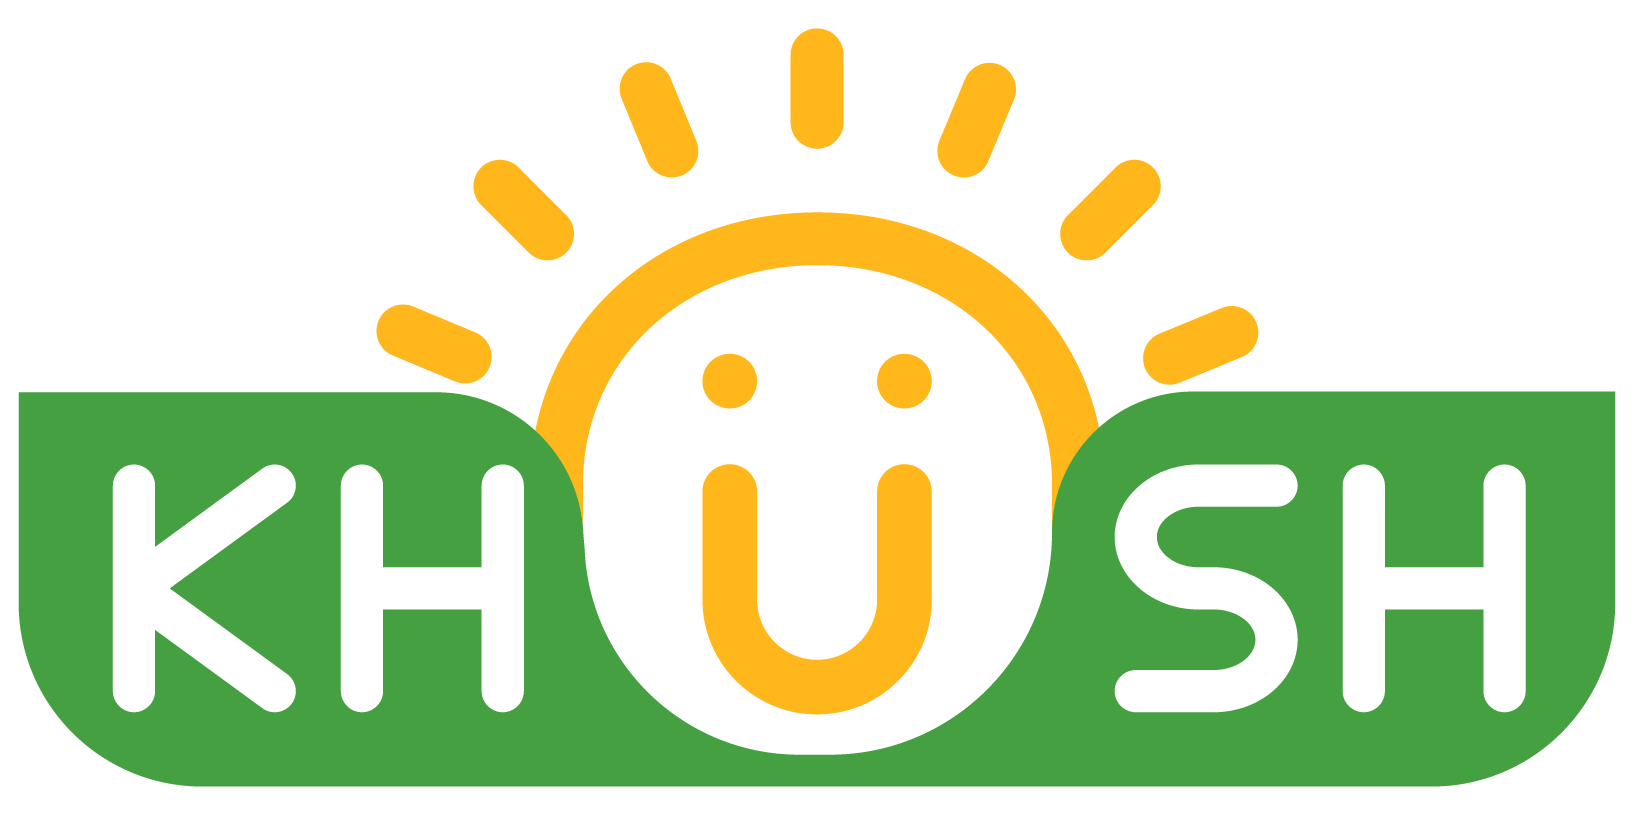 KHUSH logo